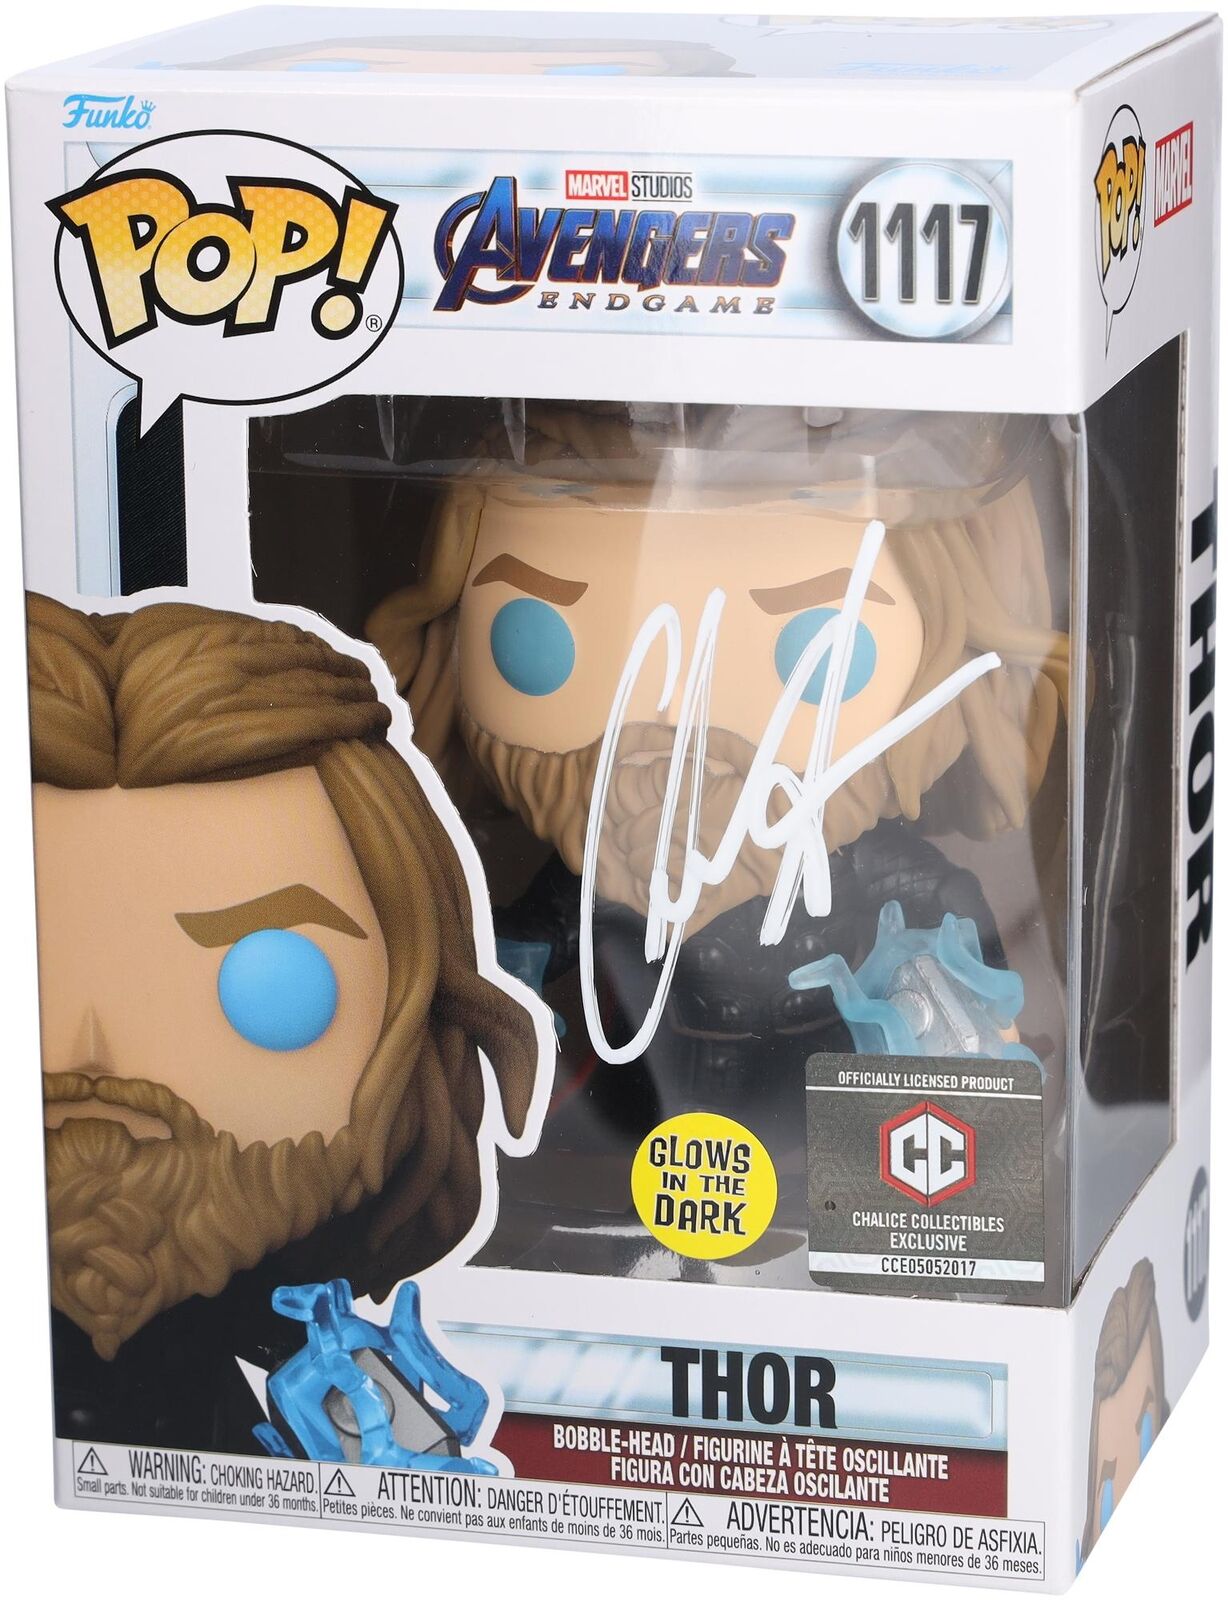 Chris Hemsworth Thor Figurine Item#13019783